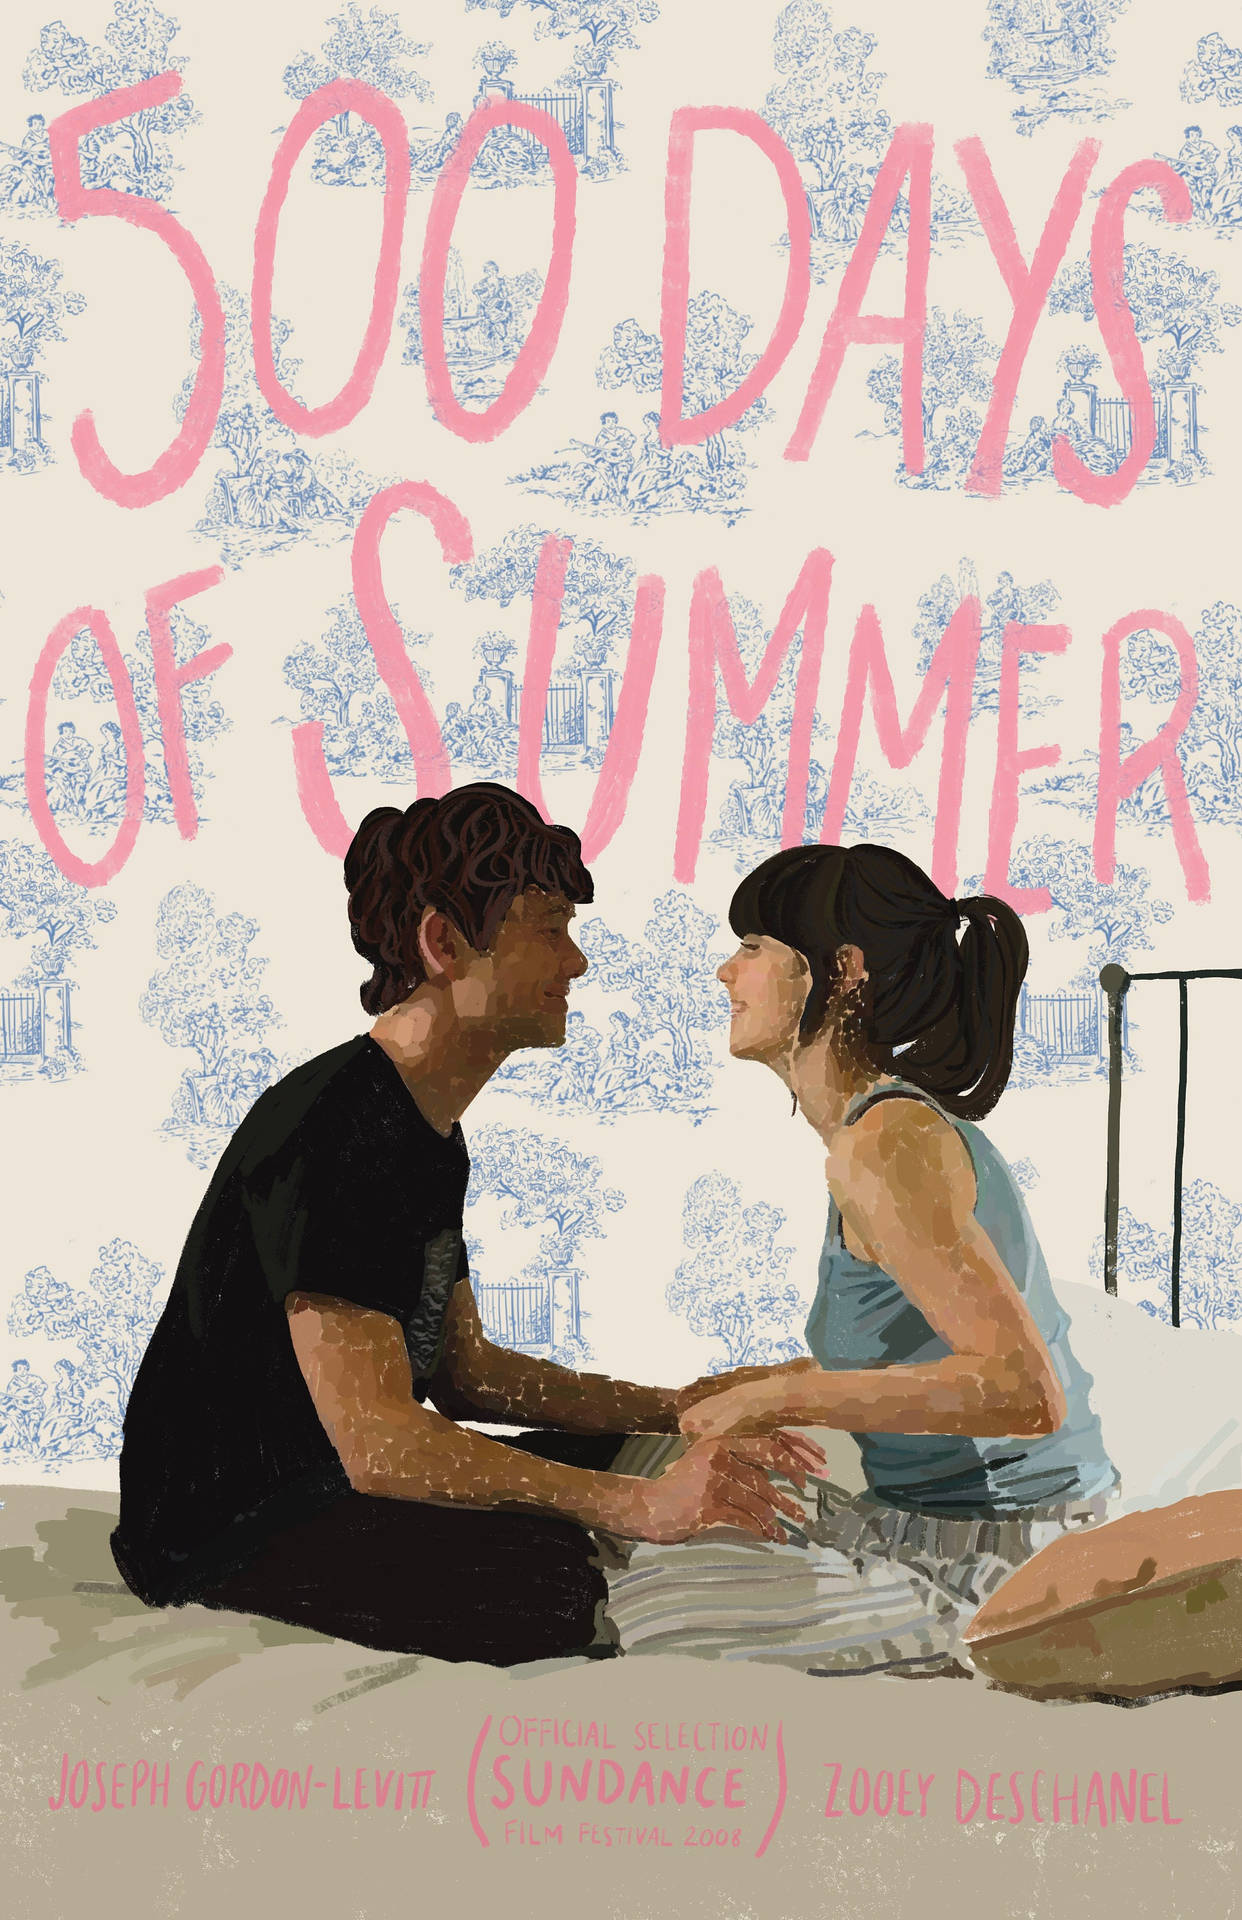 Caption: Dynamic Duo at Sundance Film Festival - 500 Days of Summer Wallpaper